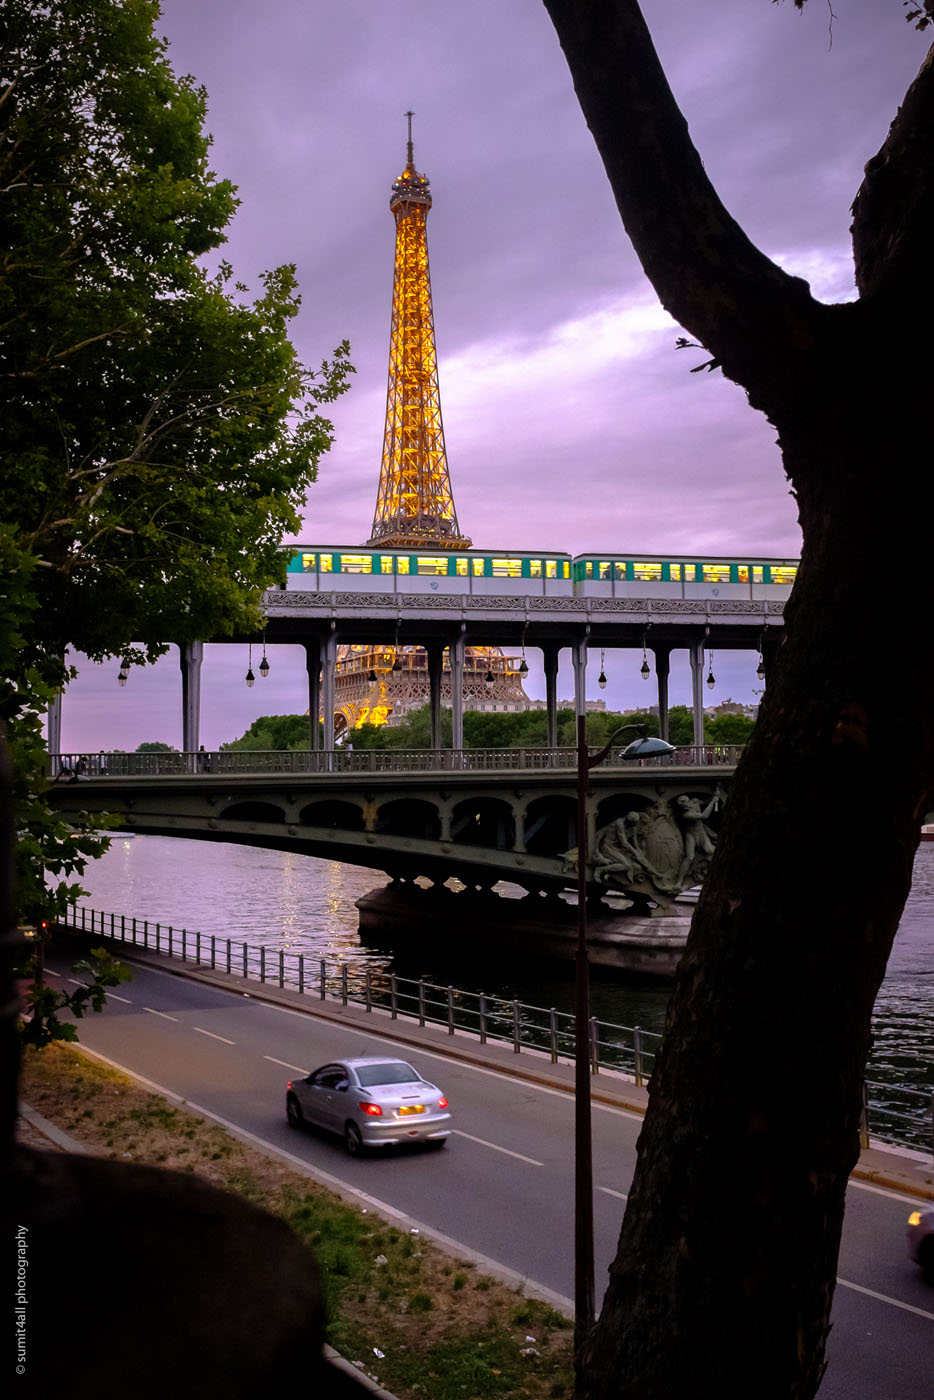 Paris Scene with Eiffel Tower